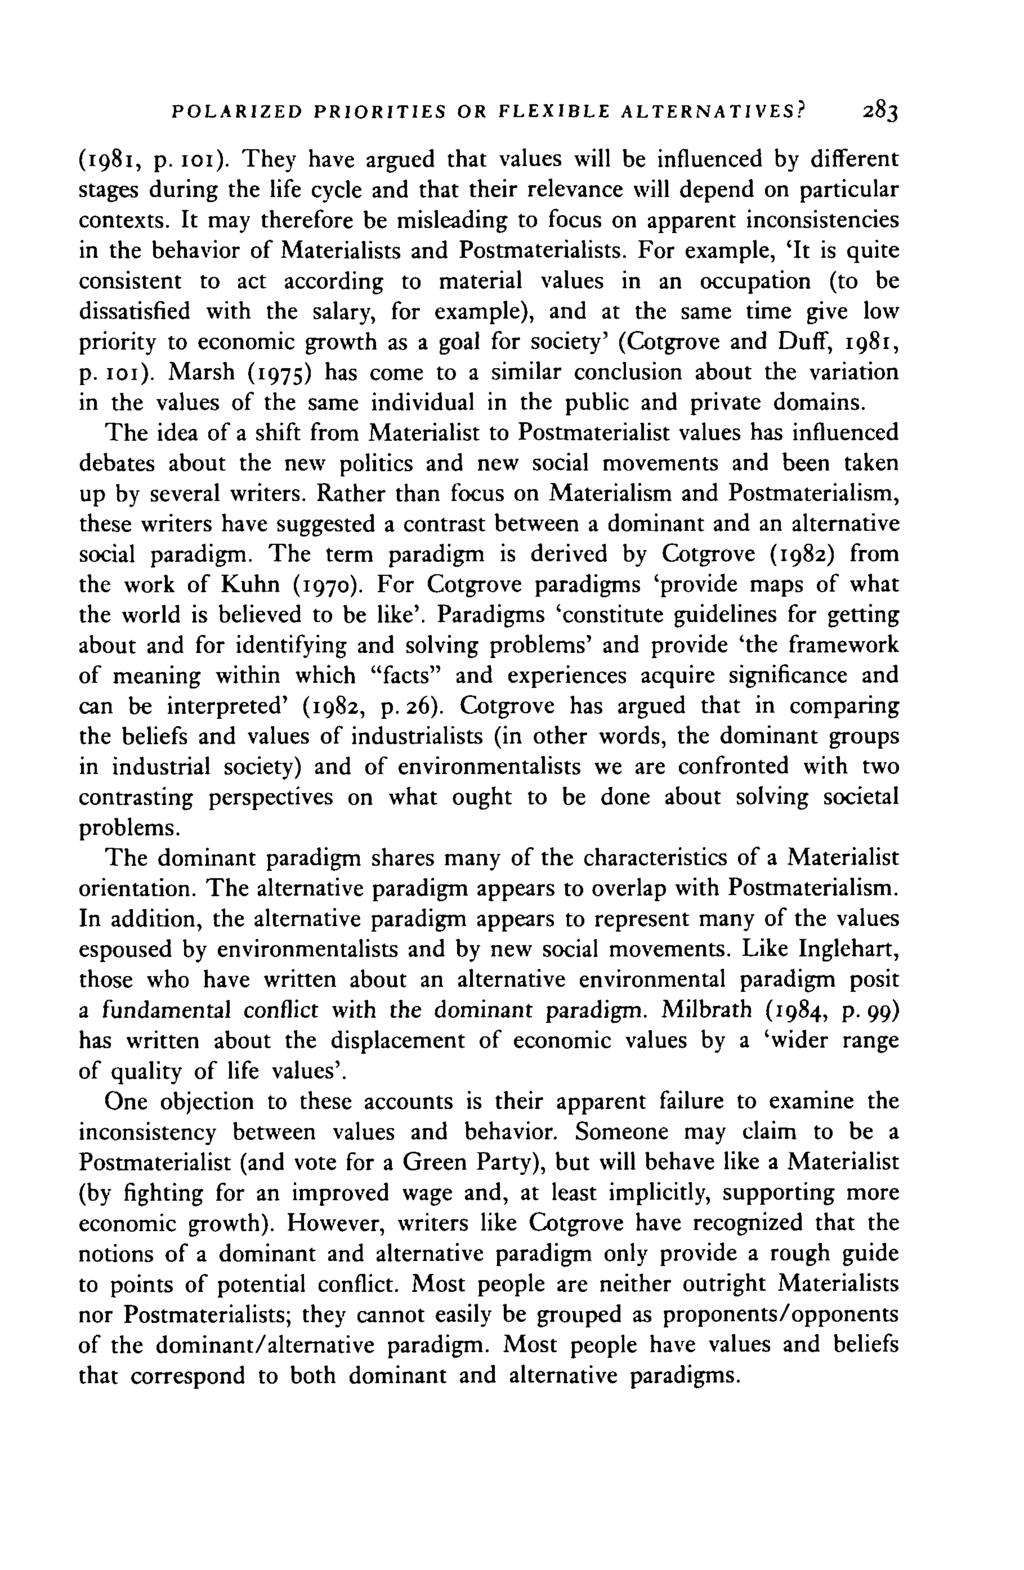 POLARIZED PRIORITIES OR FLEXIBLE ALTERNATIVES? 283 (1981, p. 101).